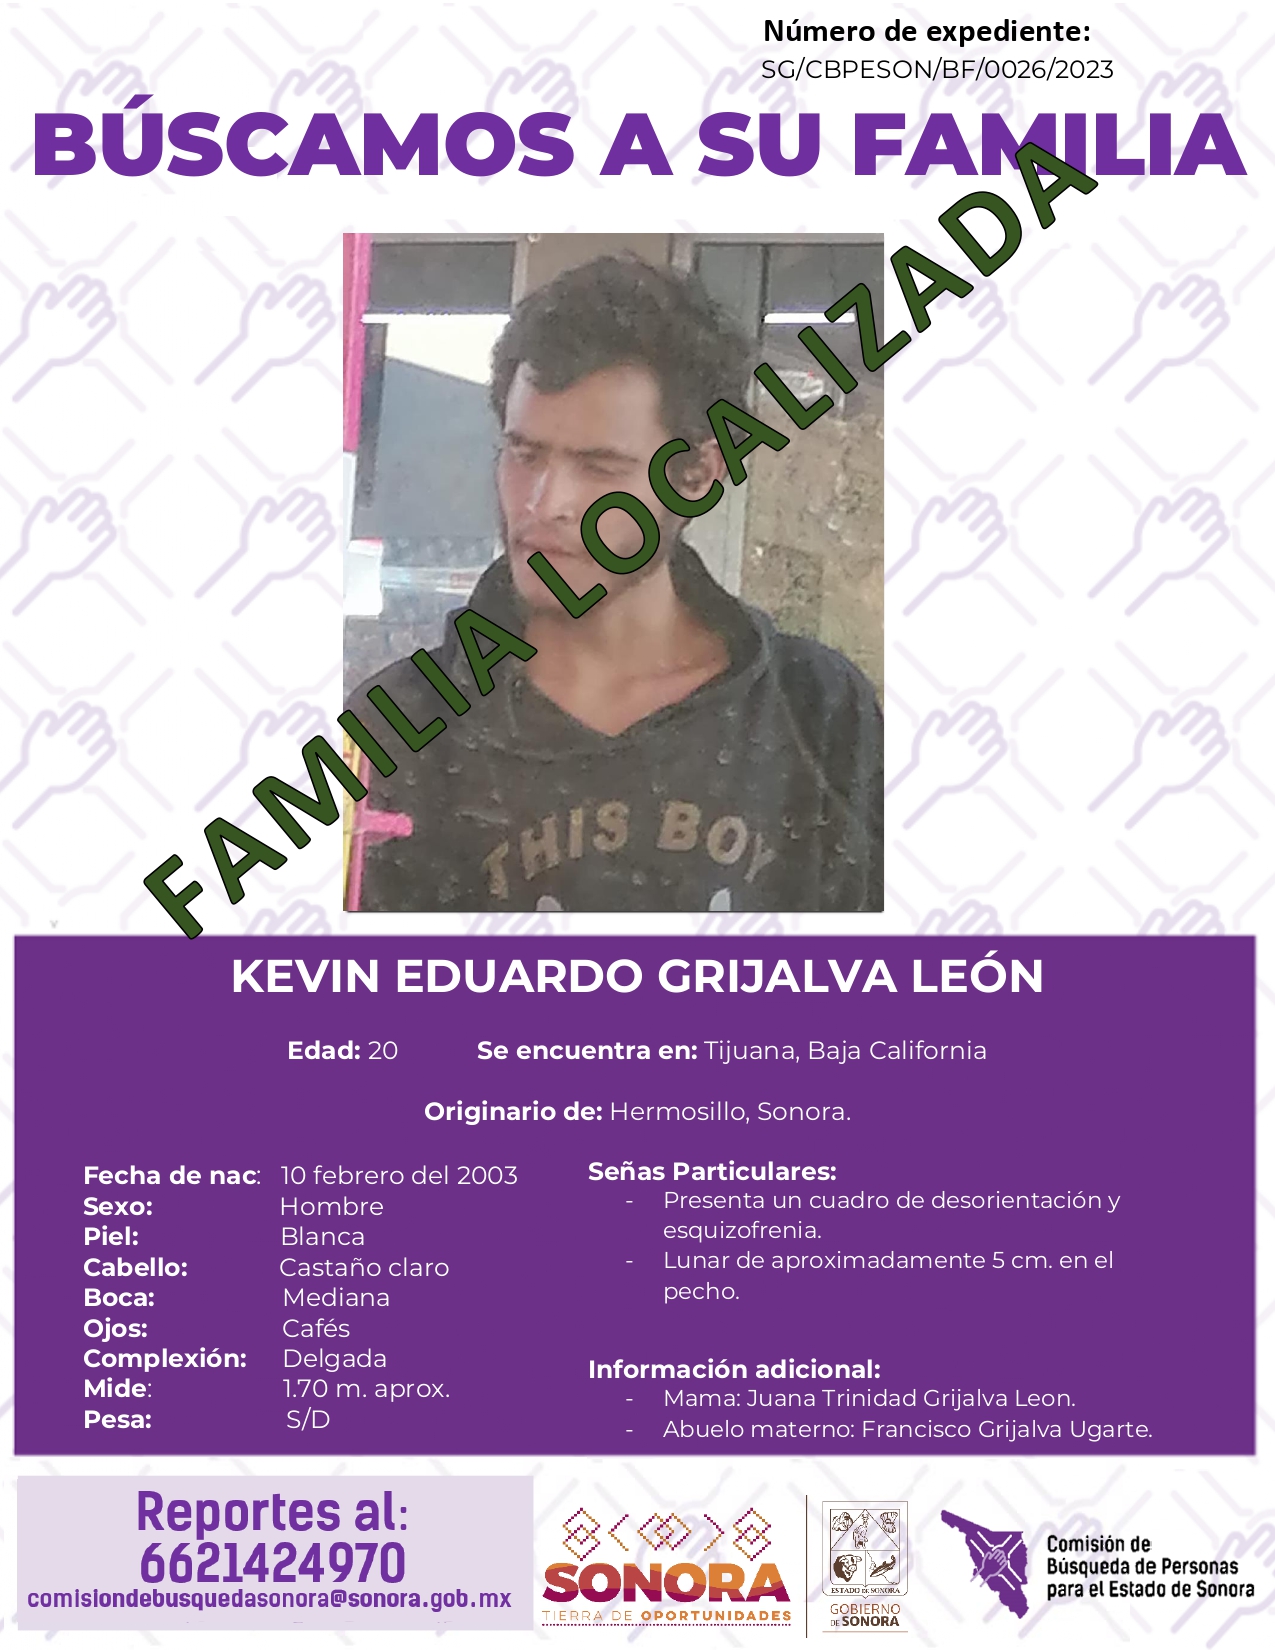 KEVIN EDUARDO GRIJALVA LEON - FAMILIA LOCALIZADA